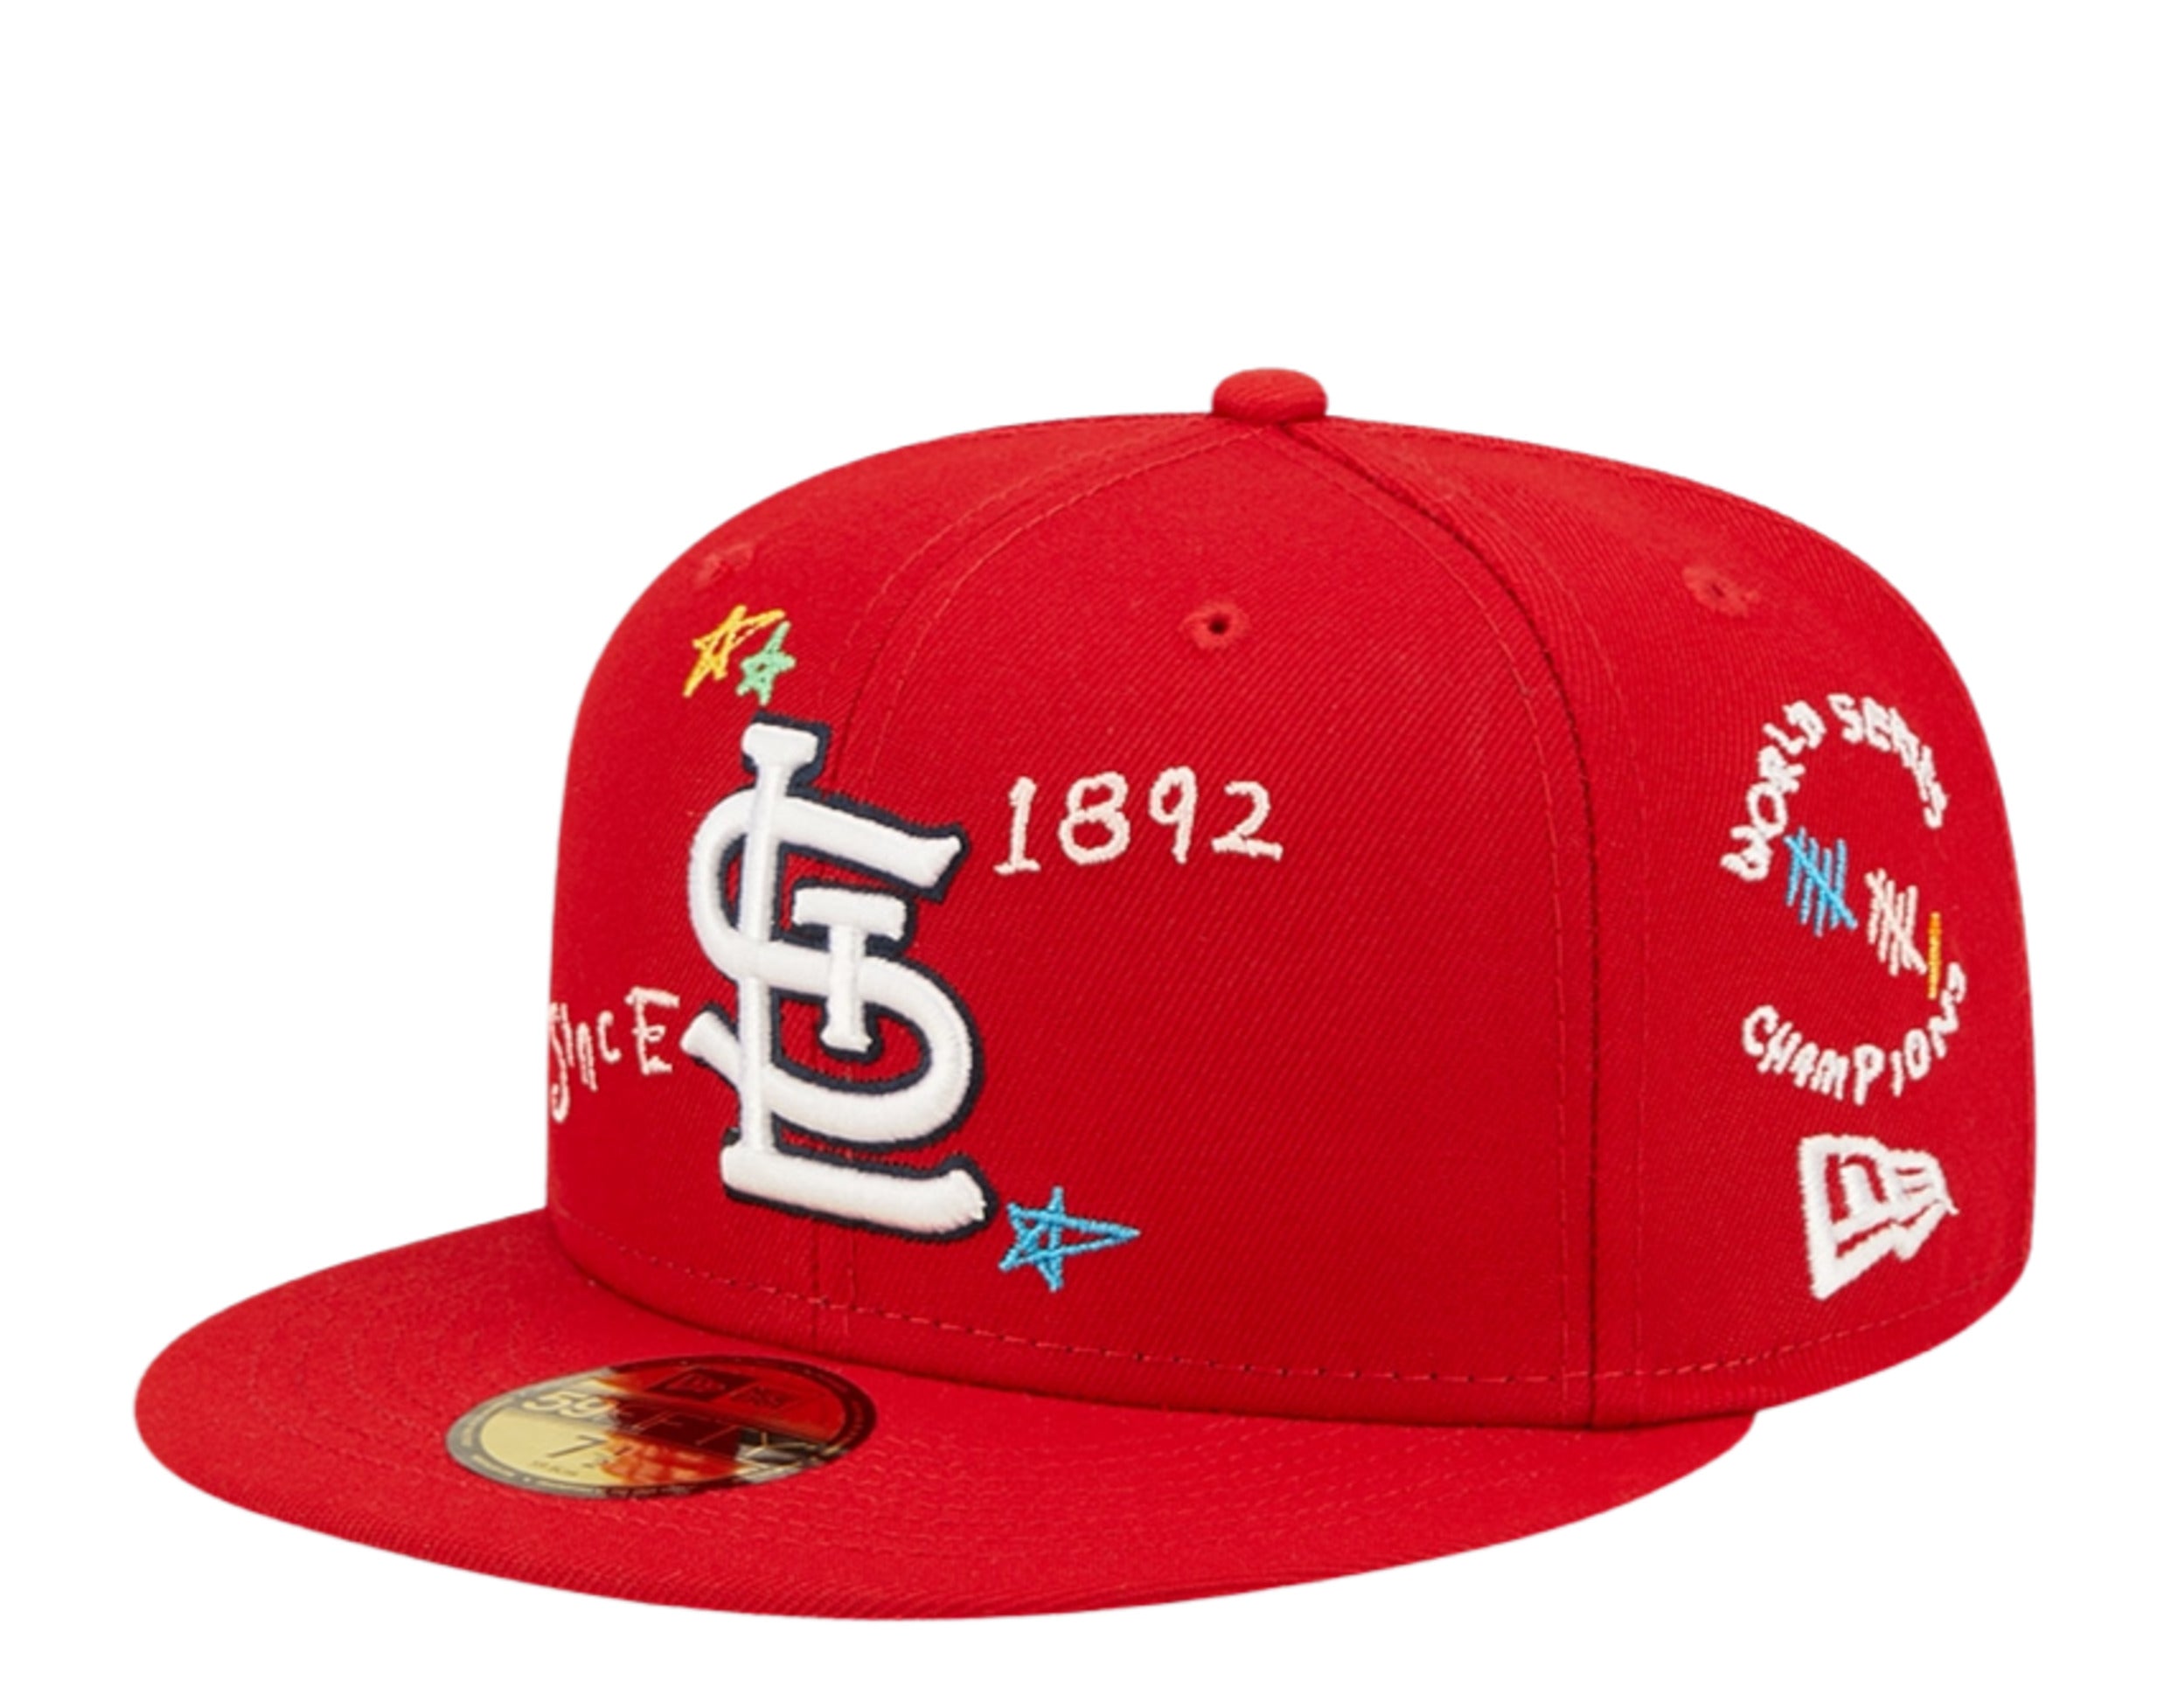 Mlb St. Louis Cardinals Pinstripe Baseball Jersey W/ Appliqued